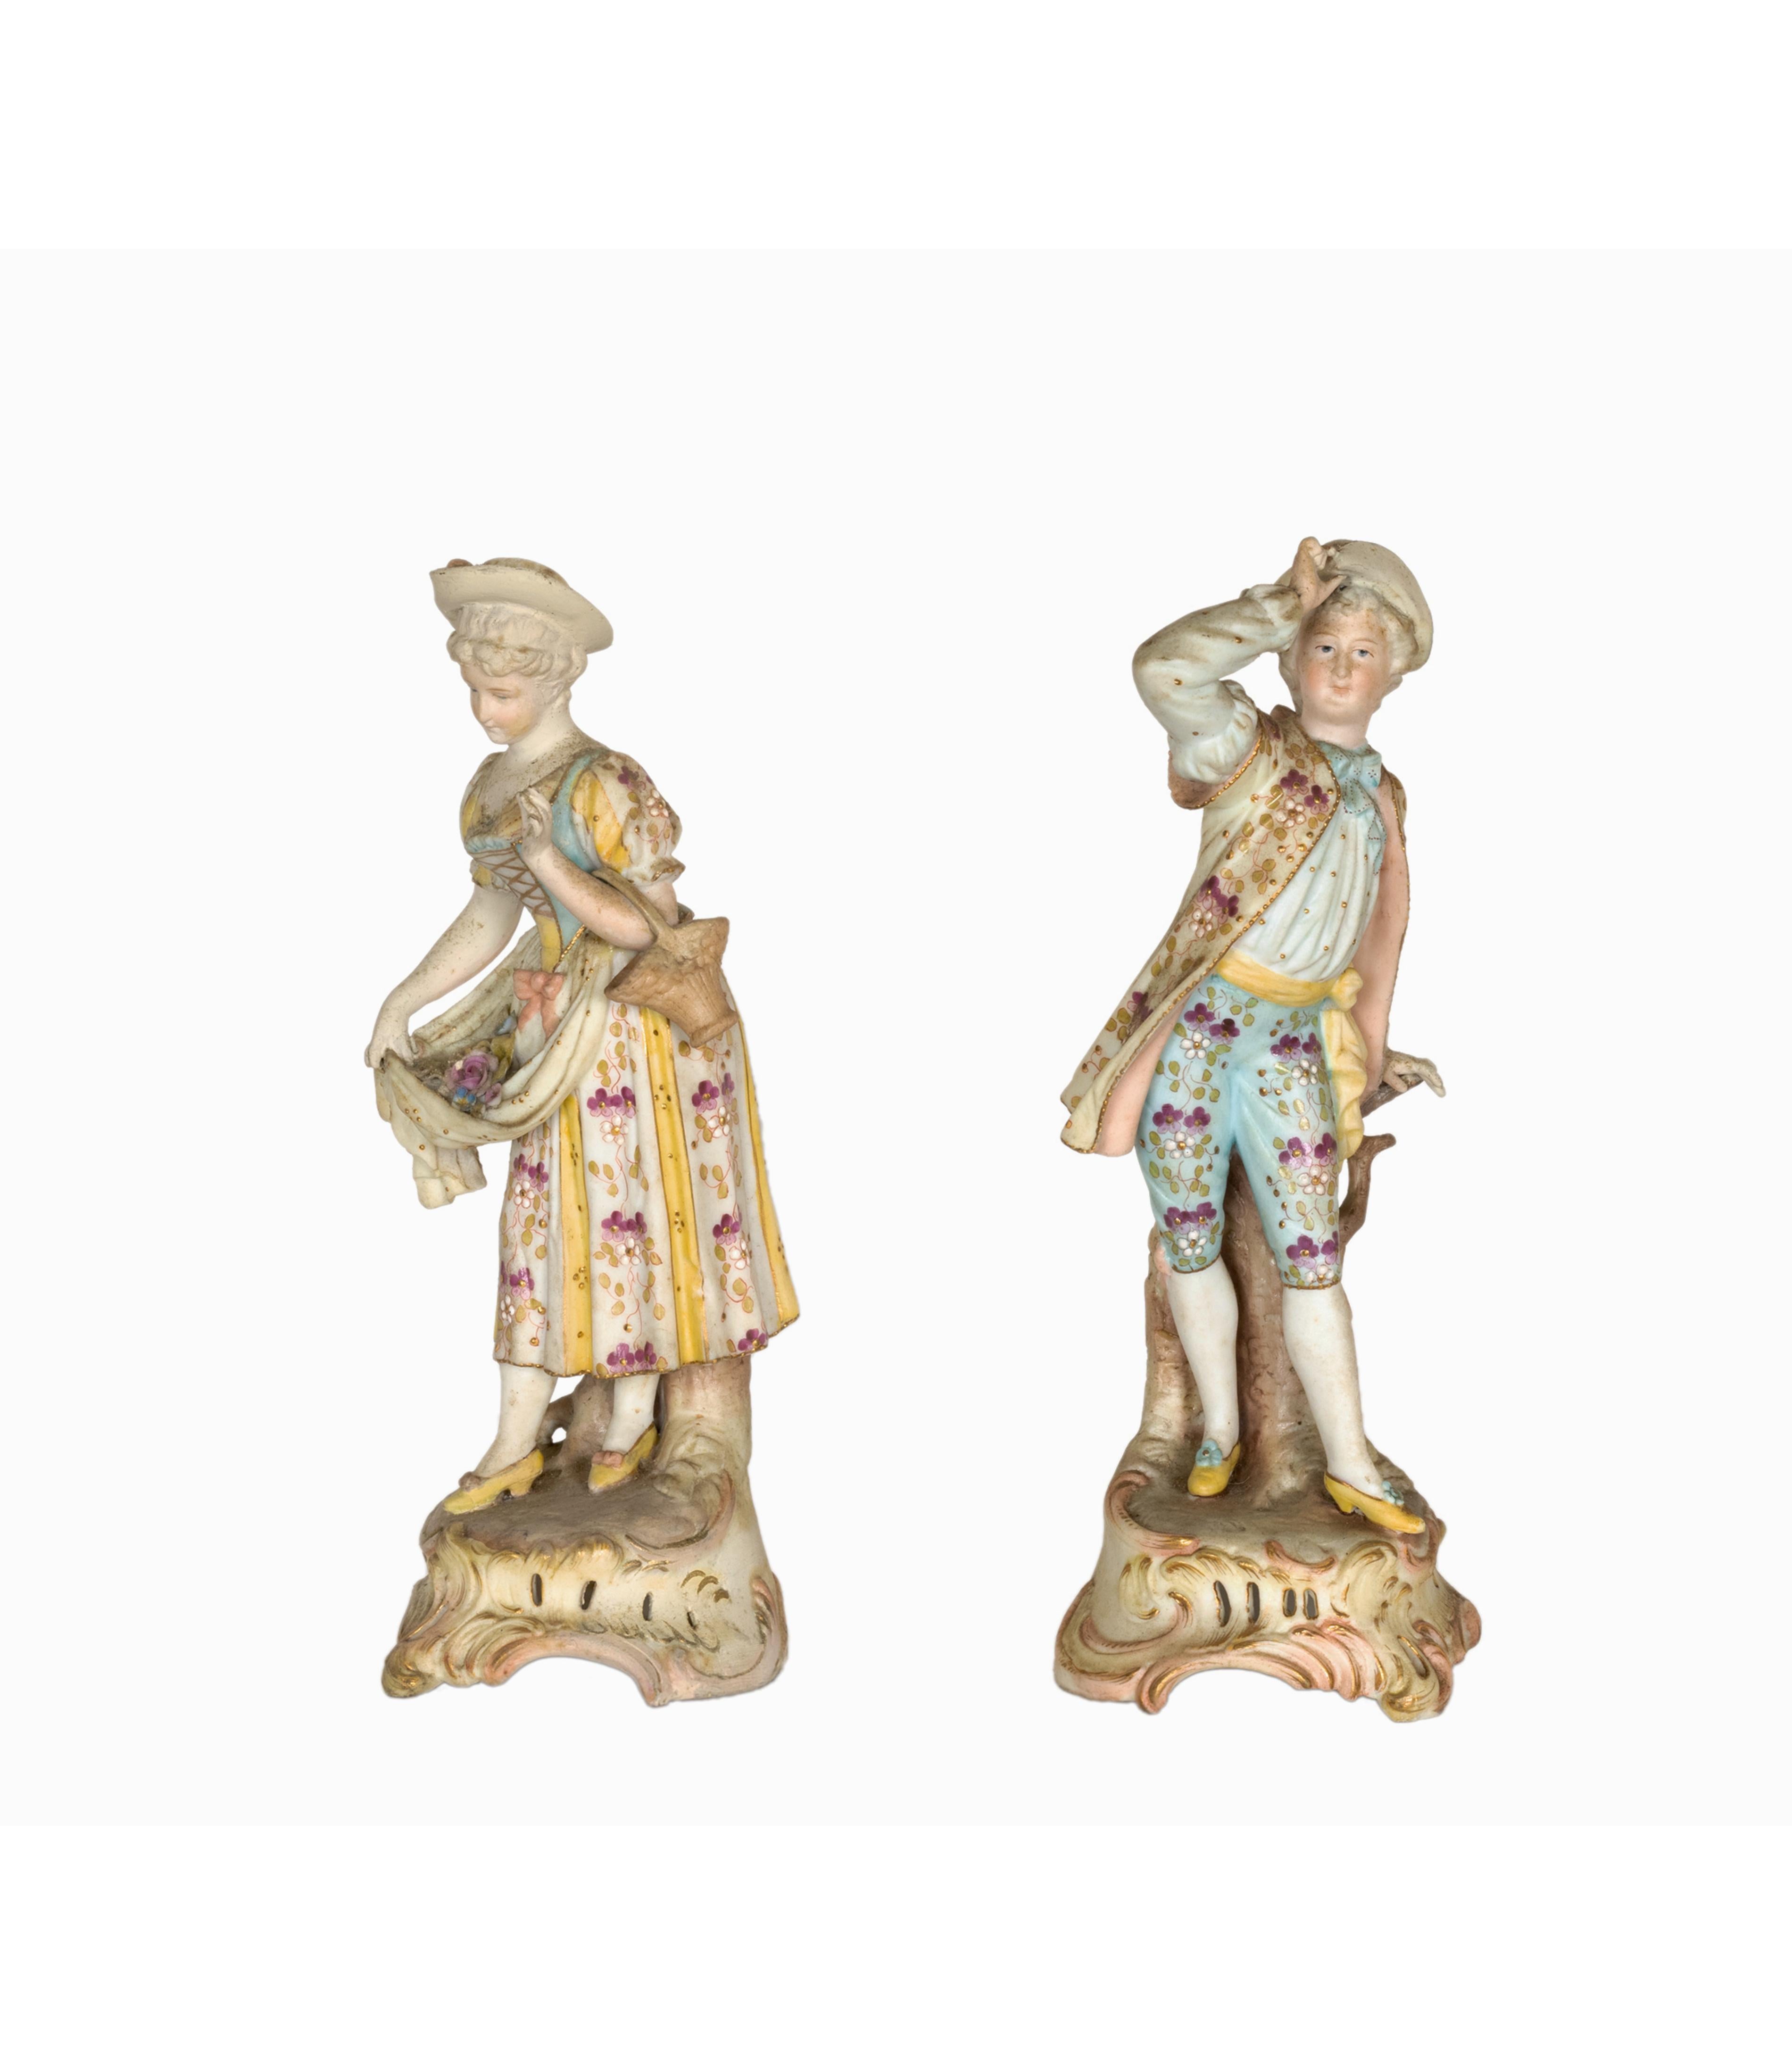 A pair of Meissen polychrome porcelain figurine in Baroque style costumes with flowers and a Meissen Deer Head mark. 
Broken finger in the girl`s hand.

Madam Height: 19.5 cm Diameter 7.5 cms
Gentleman Height: 20 cm Diameter 7.5 cm

